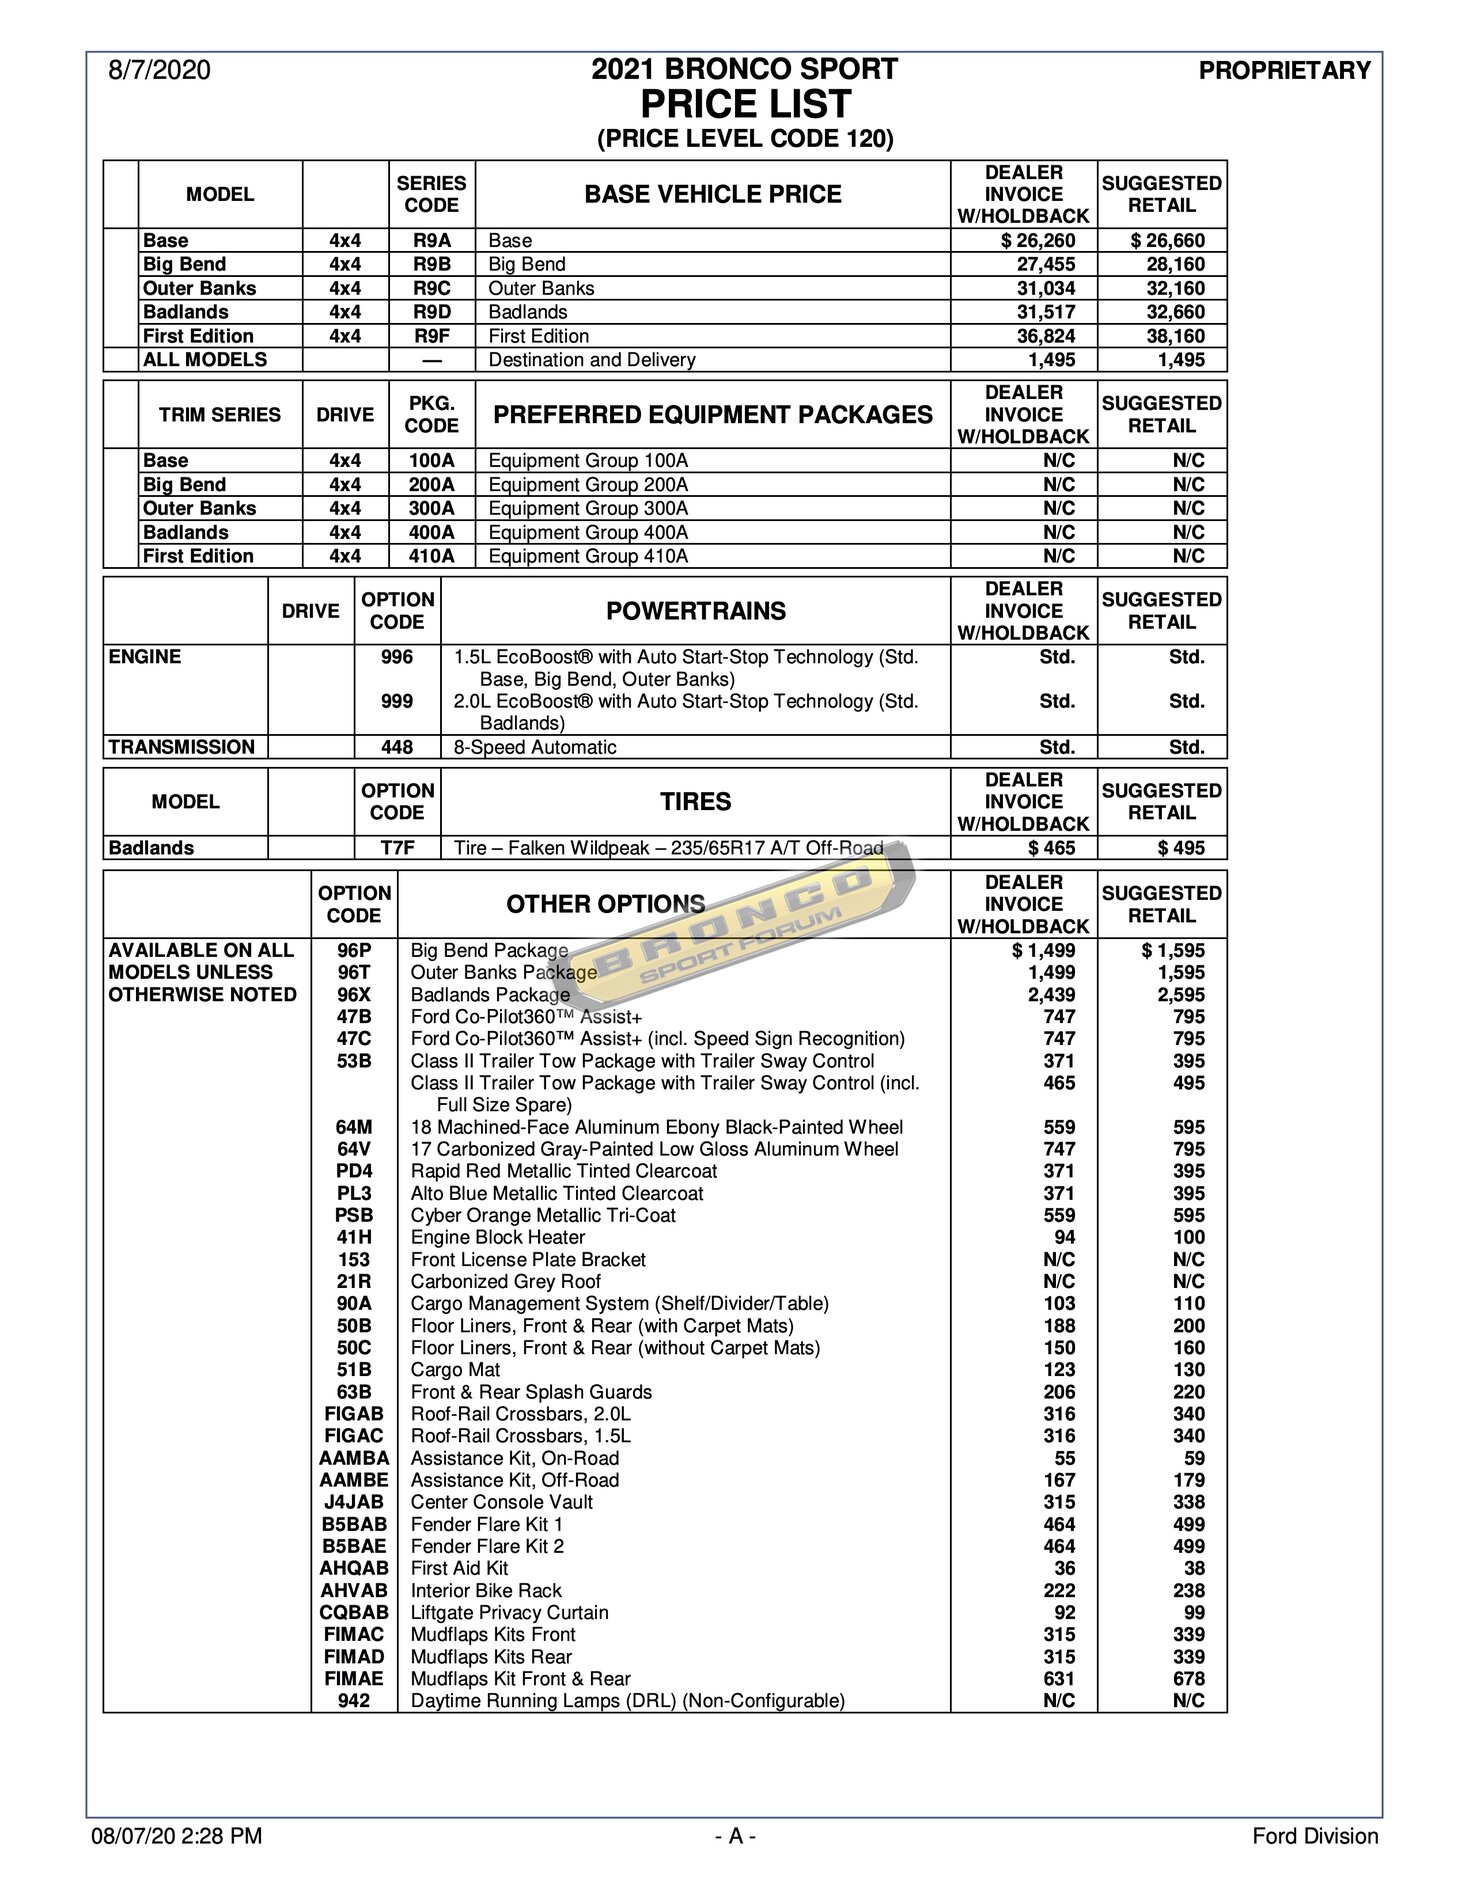 Ford Bronco Bronco pricing & savings spreadsheet (X-Plan vs Invoice and Below Invoice) 2021 Bronco Sport Price List